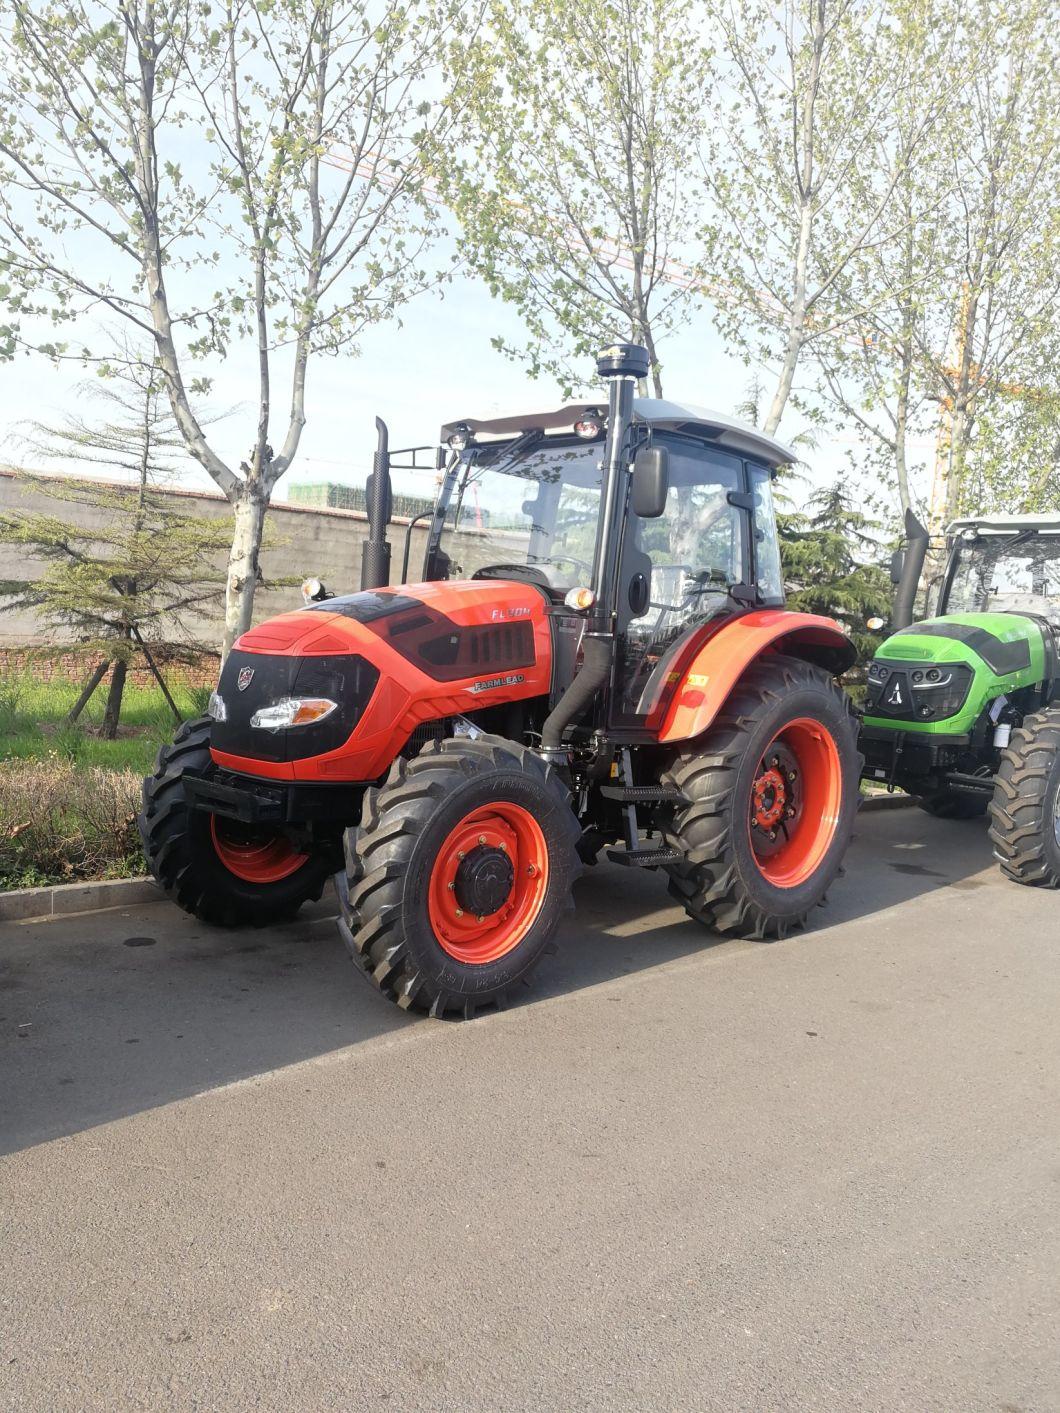 Sdf Chinese Factory Produced Farmlead, Hanomag, Matador Farm Tractors